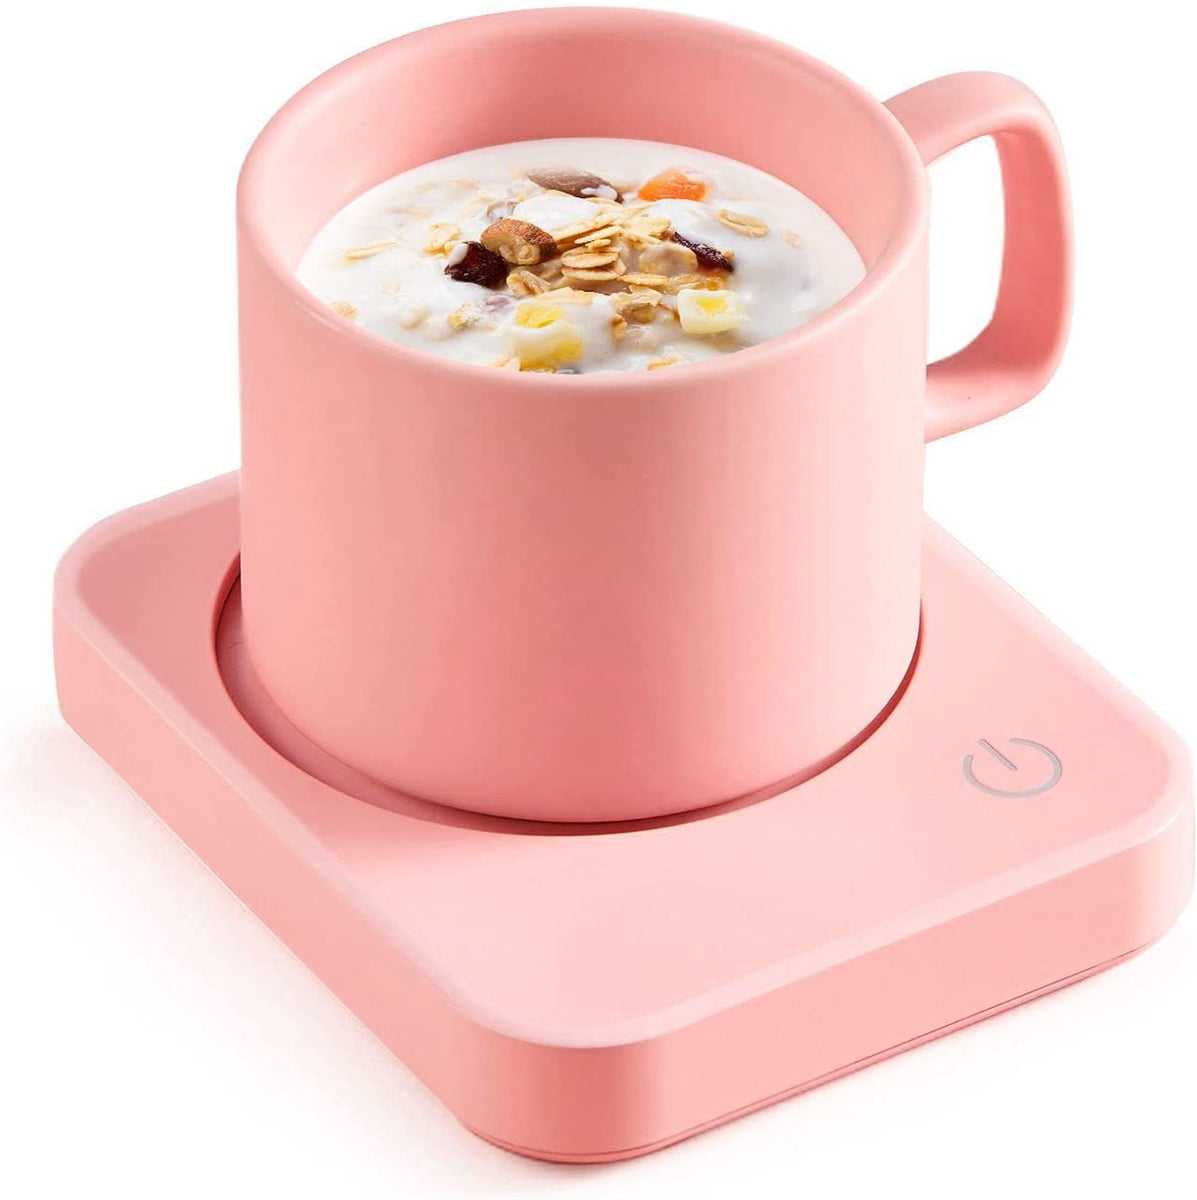 VOBAGA Coffee Mug Warmer & Electric Beverage Warmer with 5